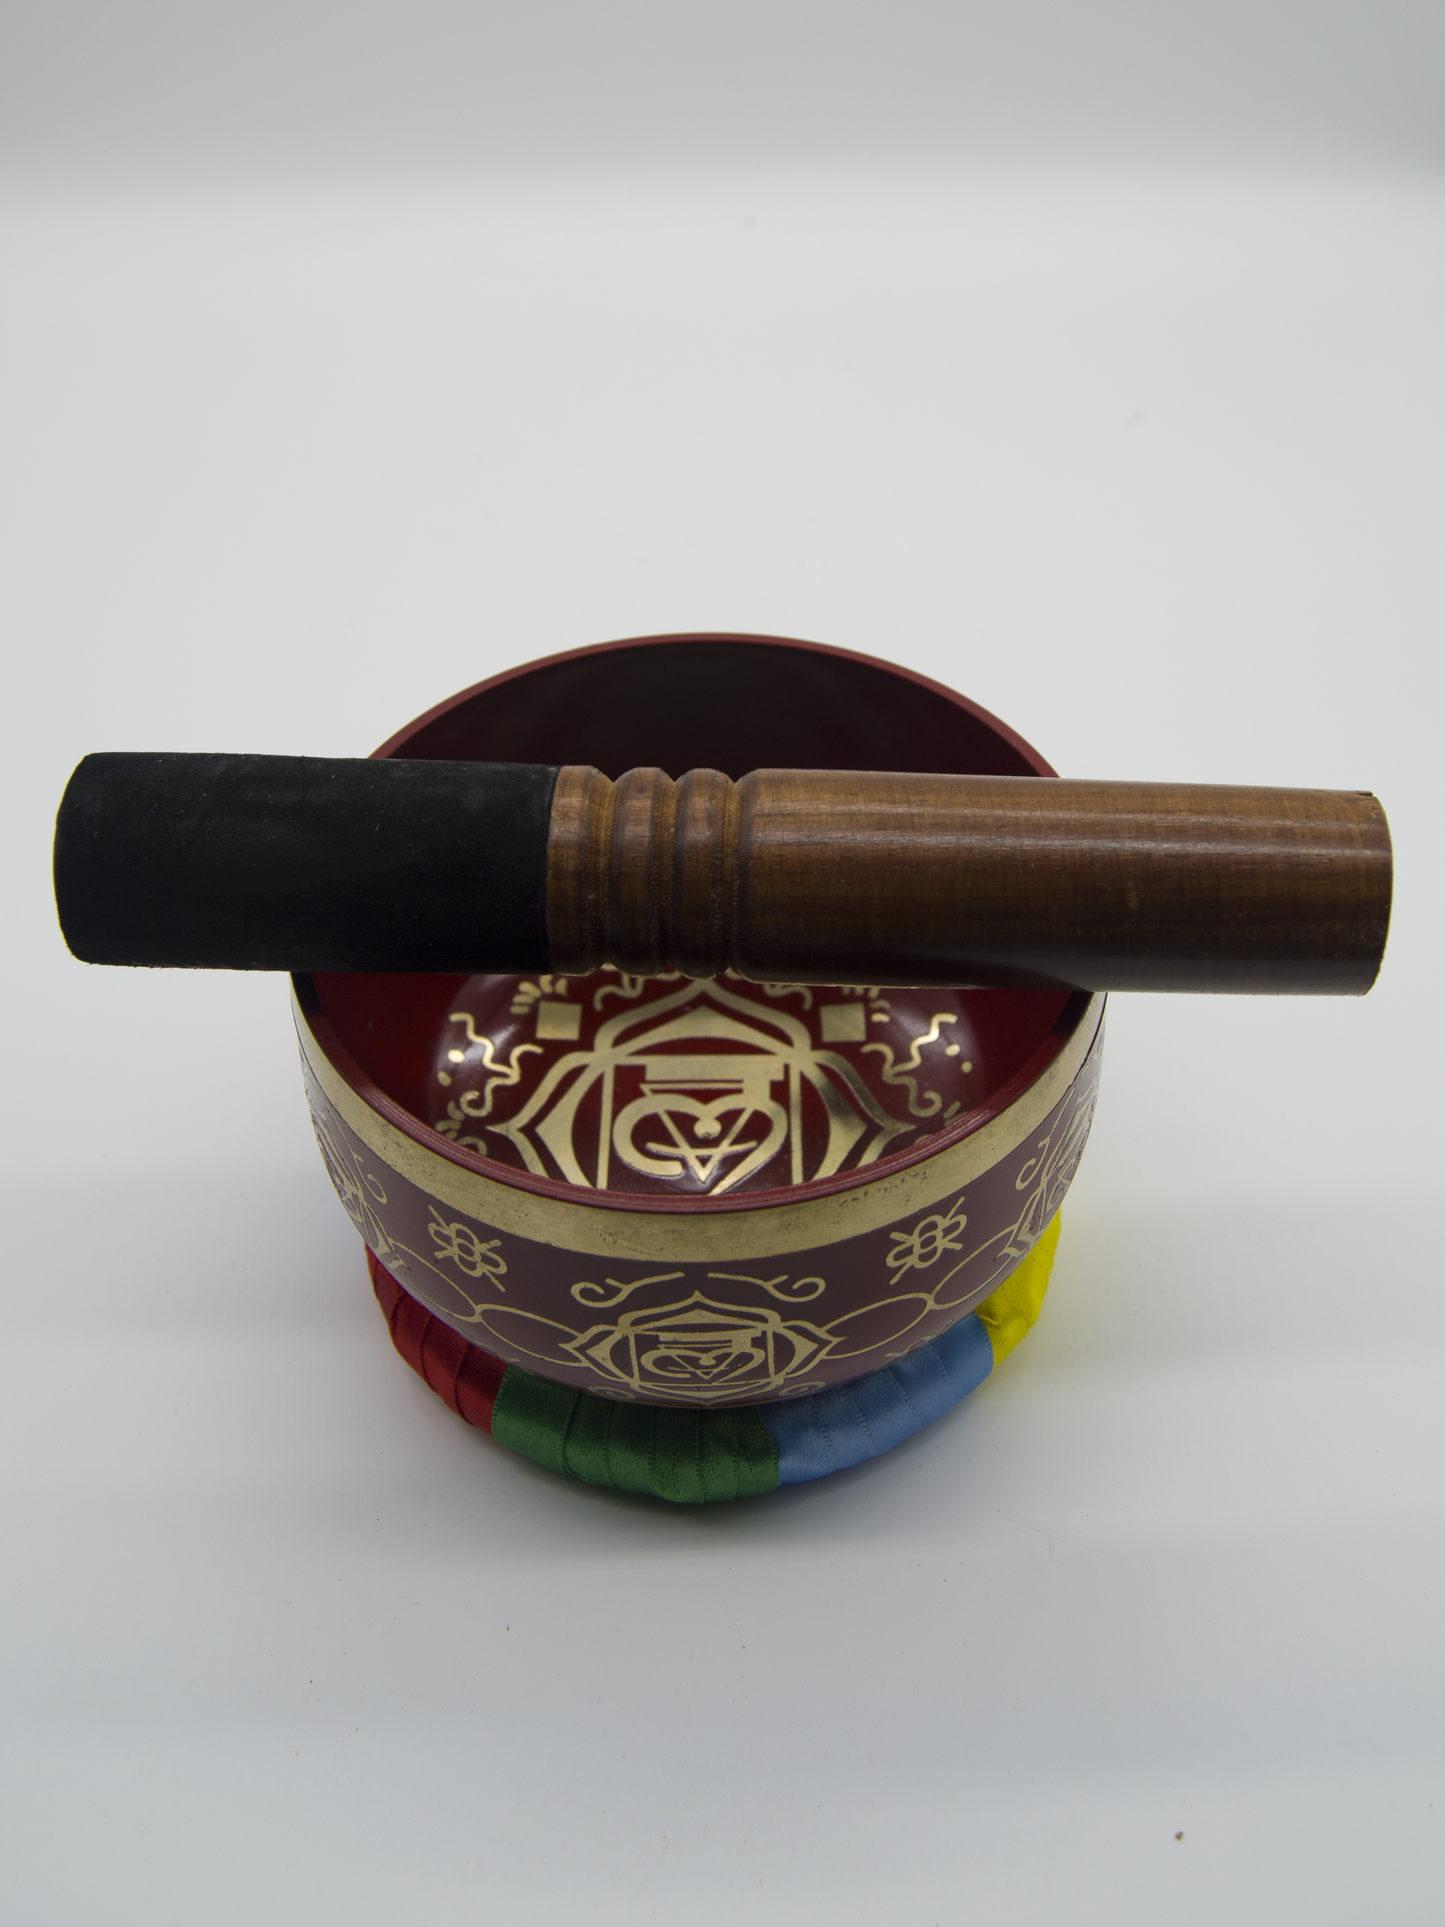 Tibetan Singing Bowl With Wooden Striker Red 13cm Diameter